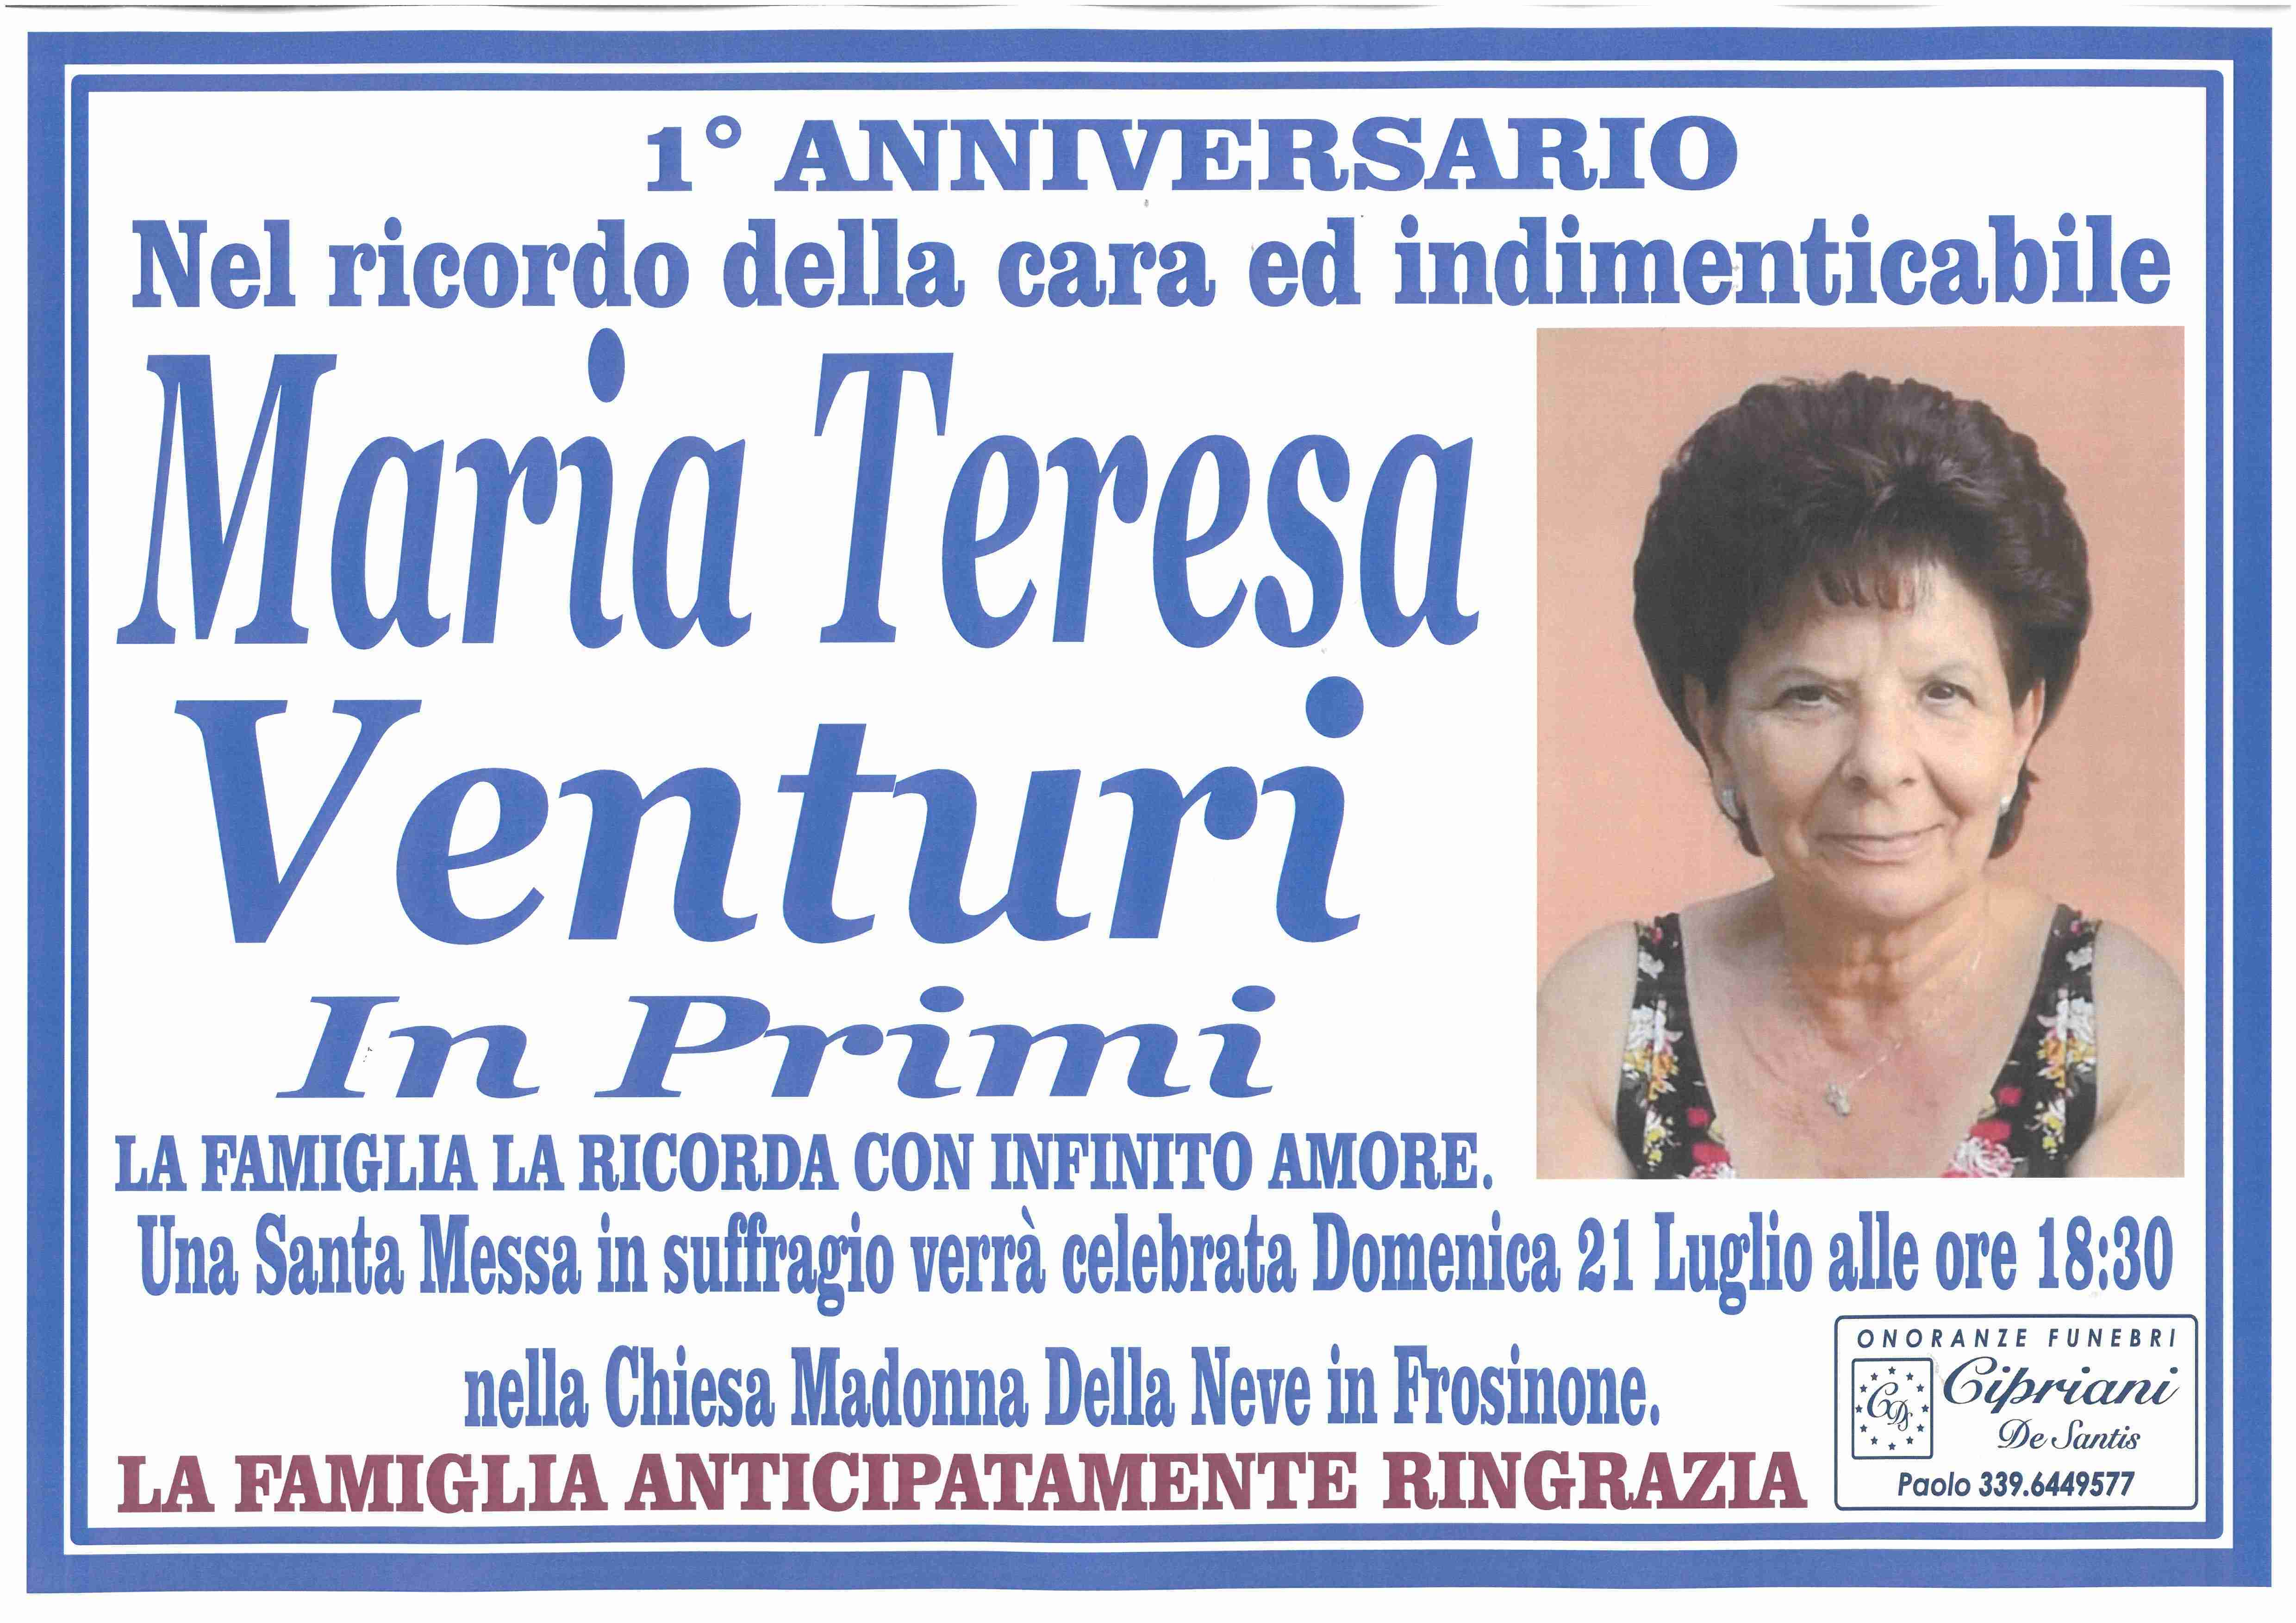 Maria Teresa Venturi